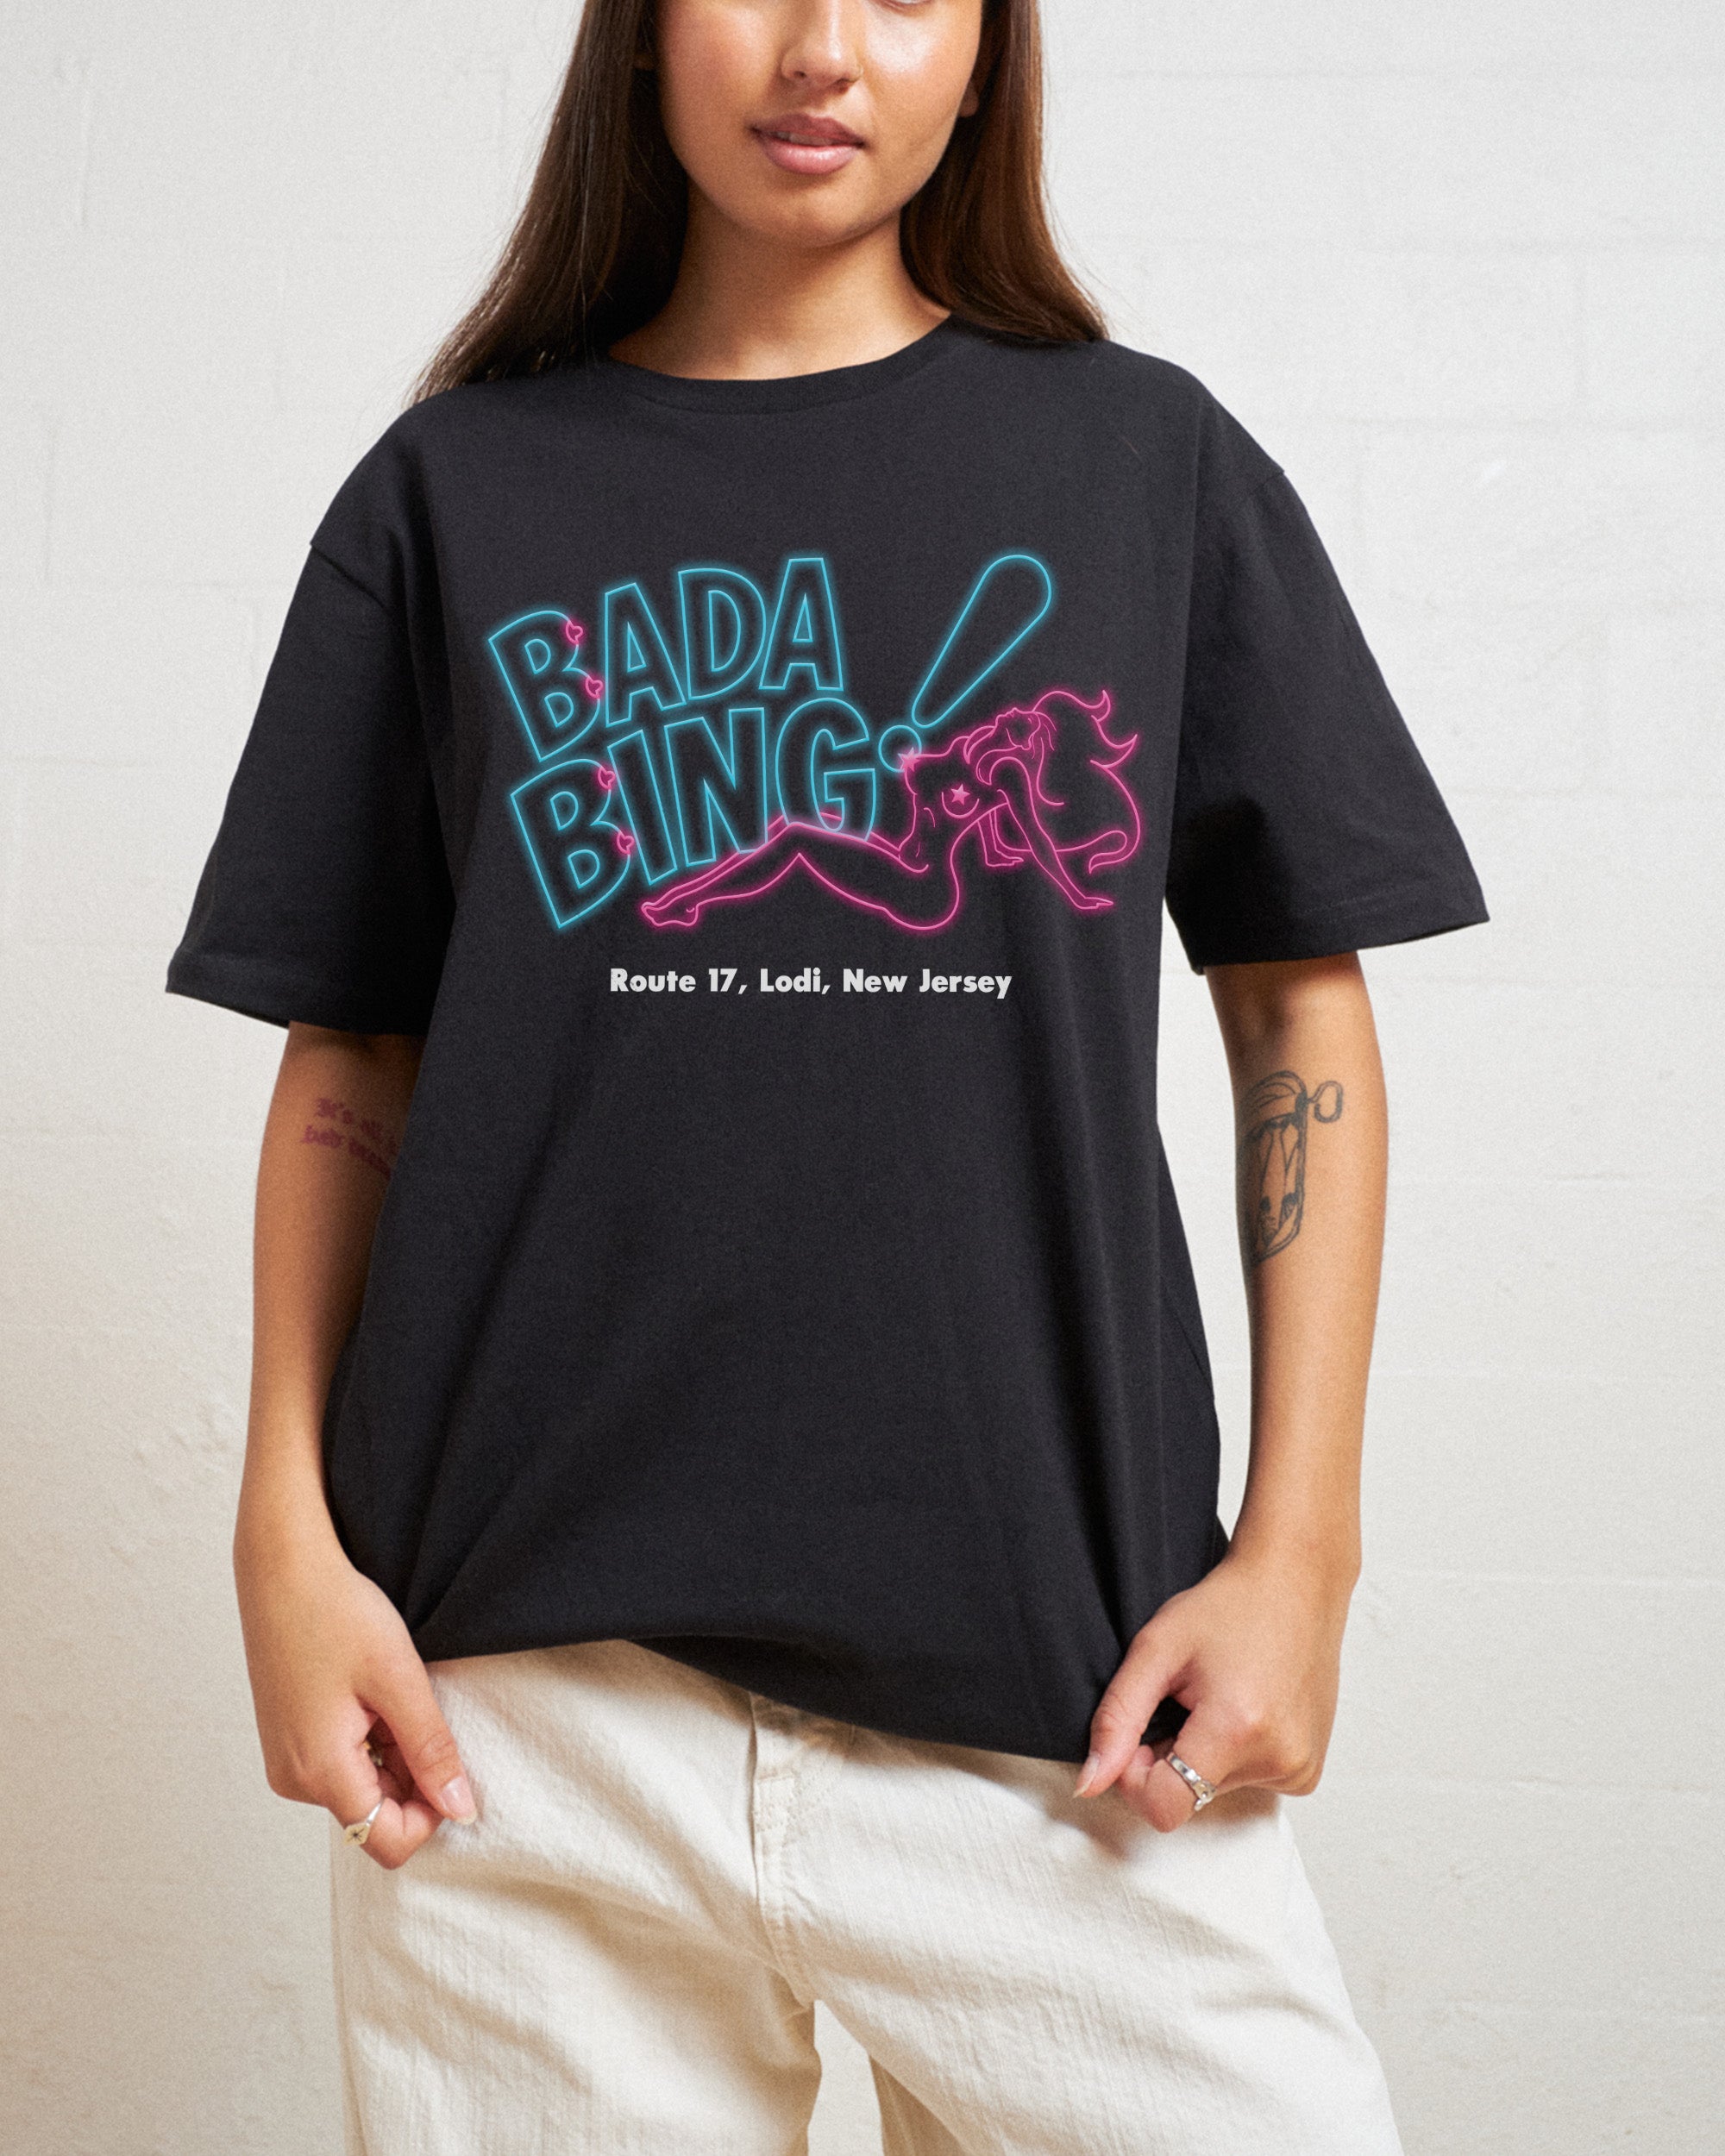 Bada Bing Strip Club T-Shirt